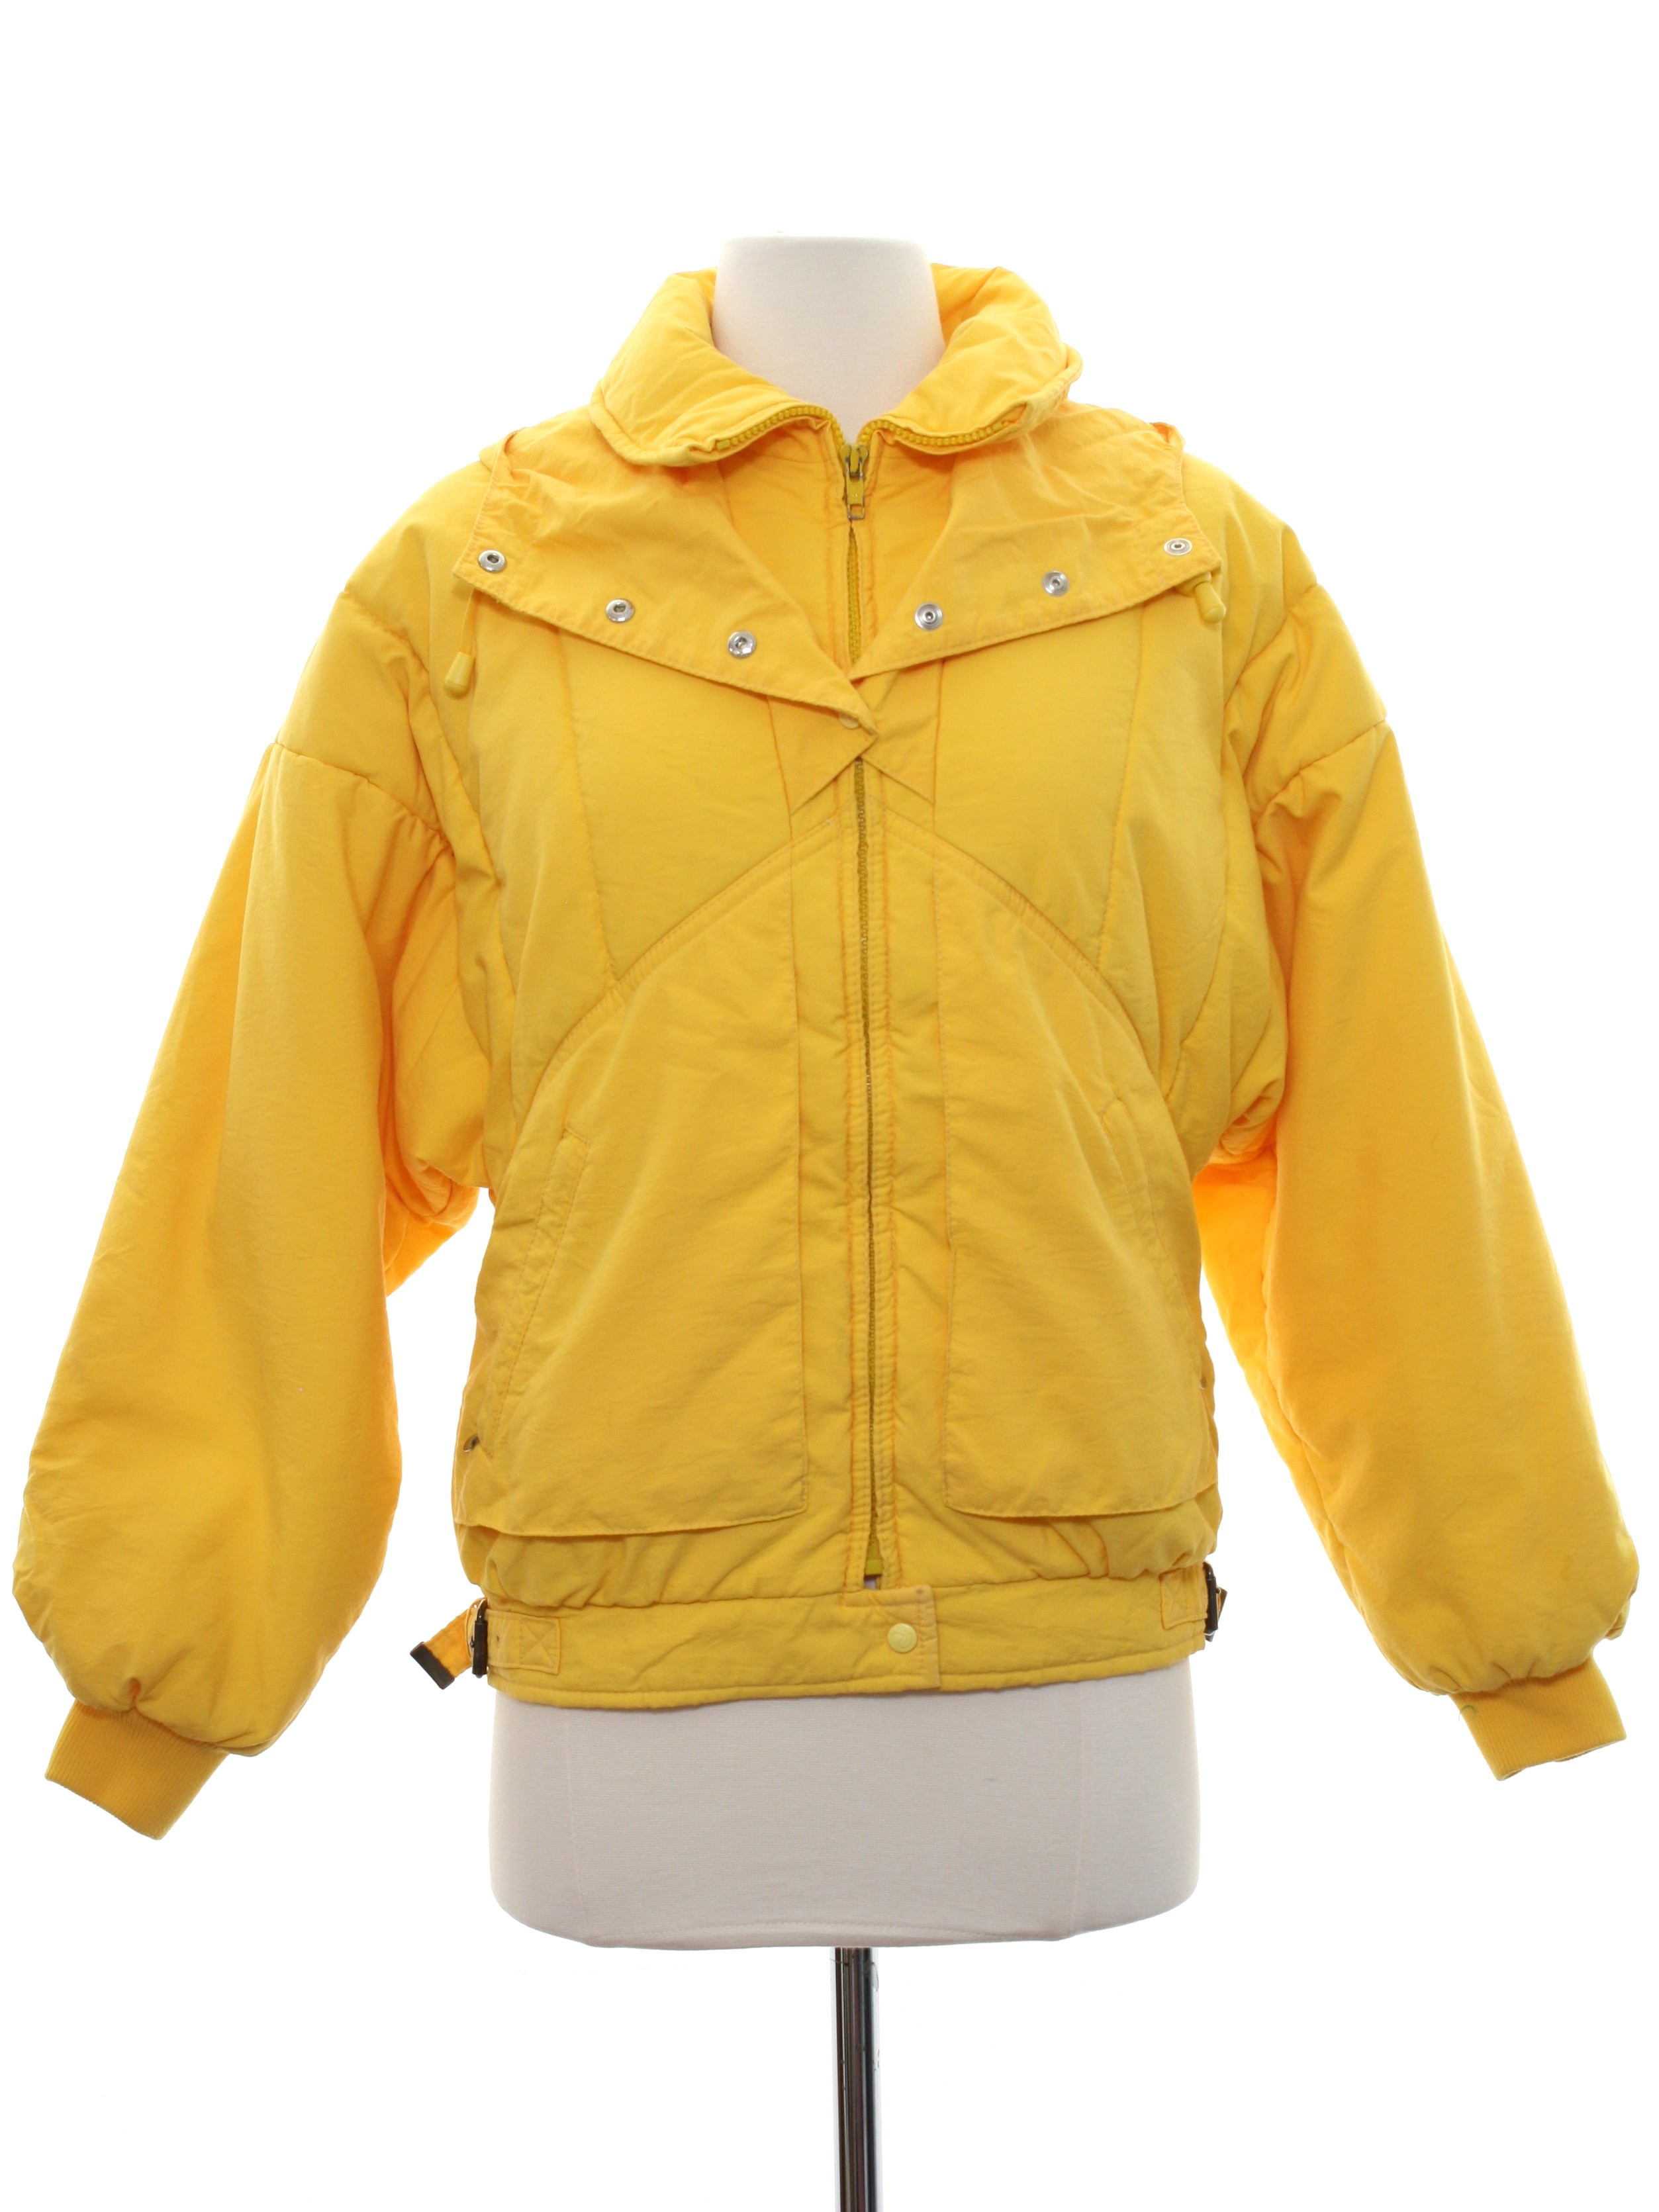 1980's Retro Jacket: 80s -Roffe- Womens yellow background cotton ...